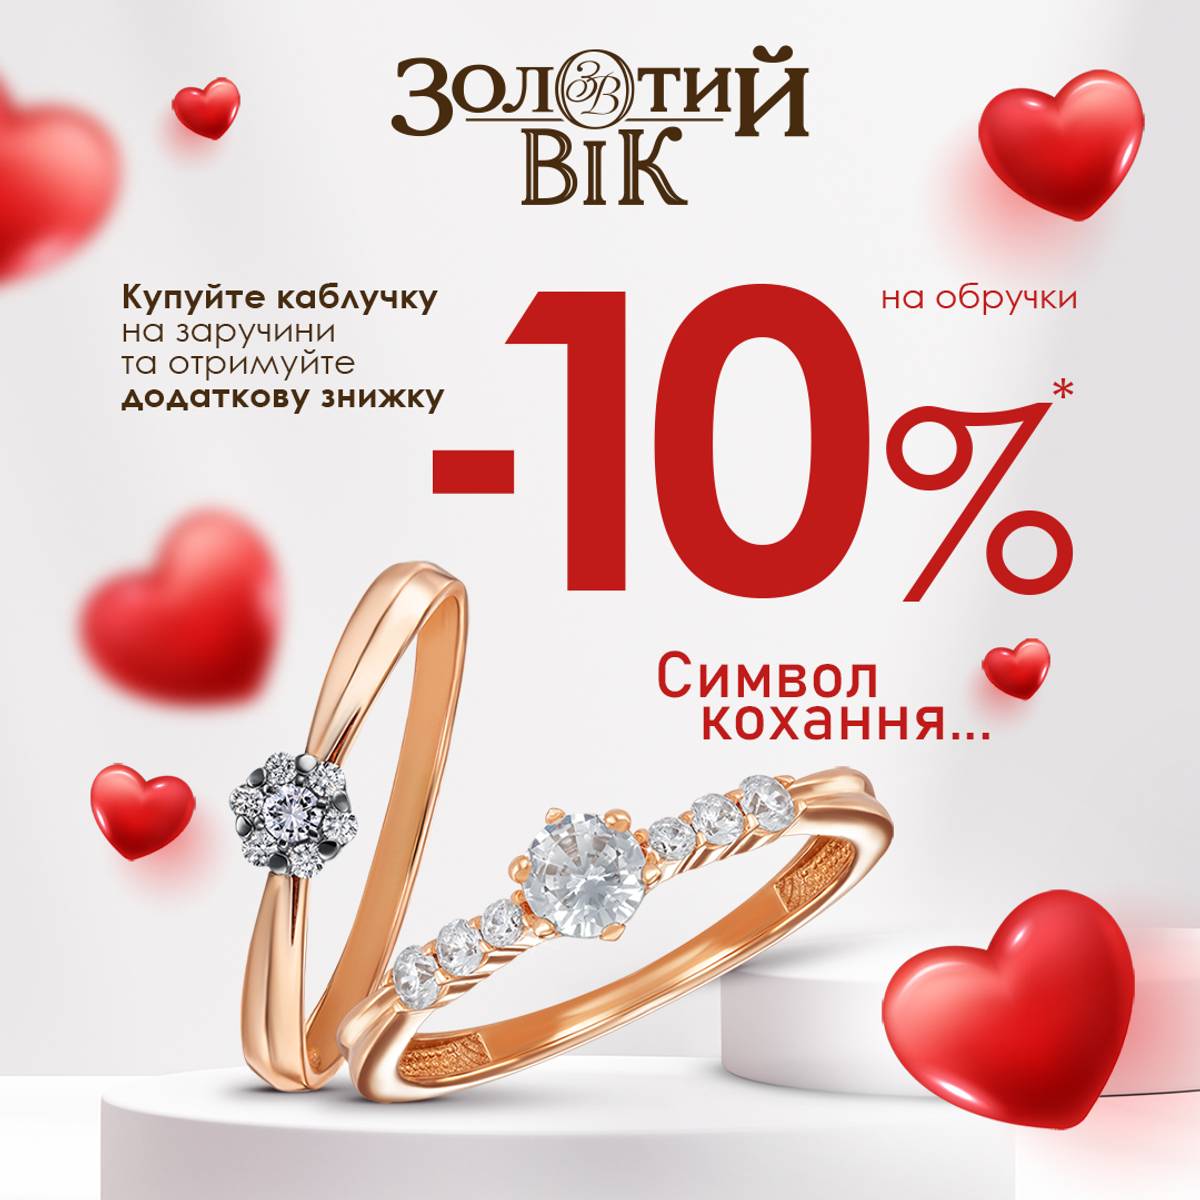 -10% on wedding rings